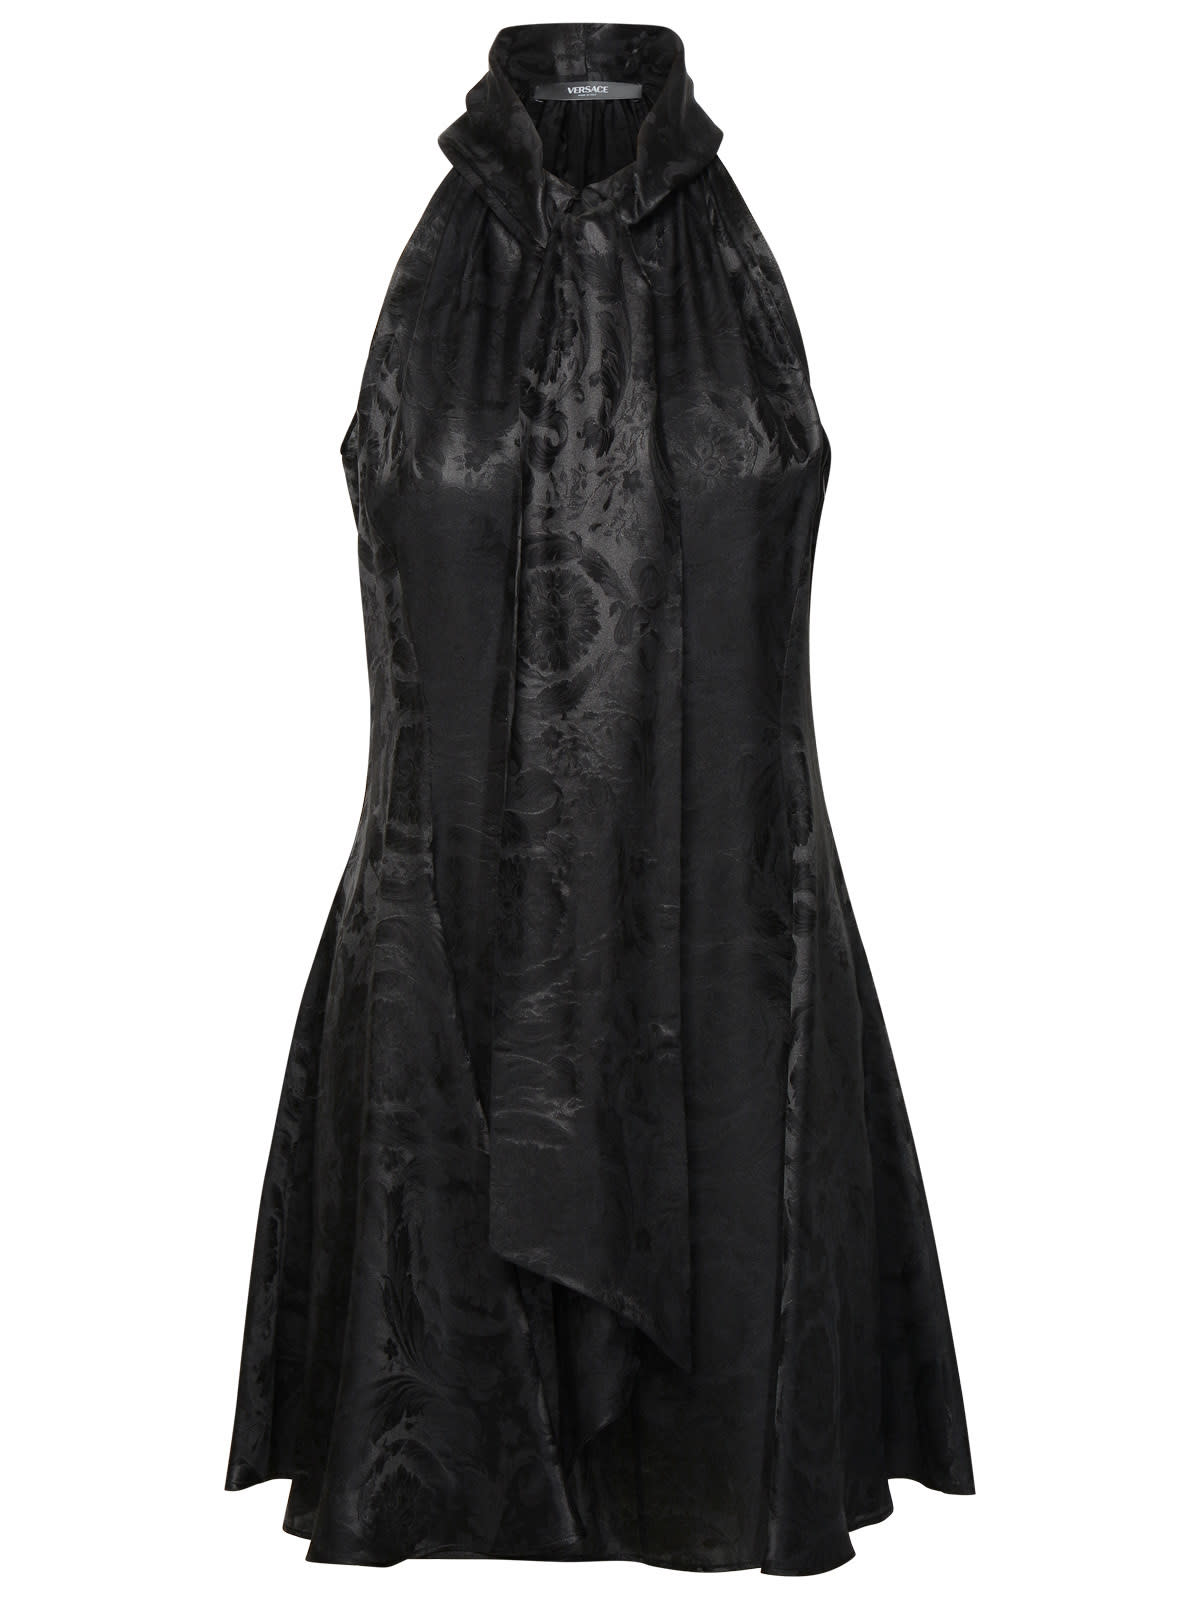 VERSACE BAROCCO DRESS IN BLACK SILK BLEND